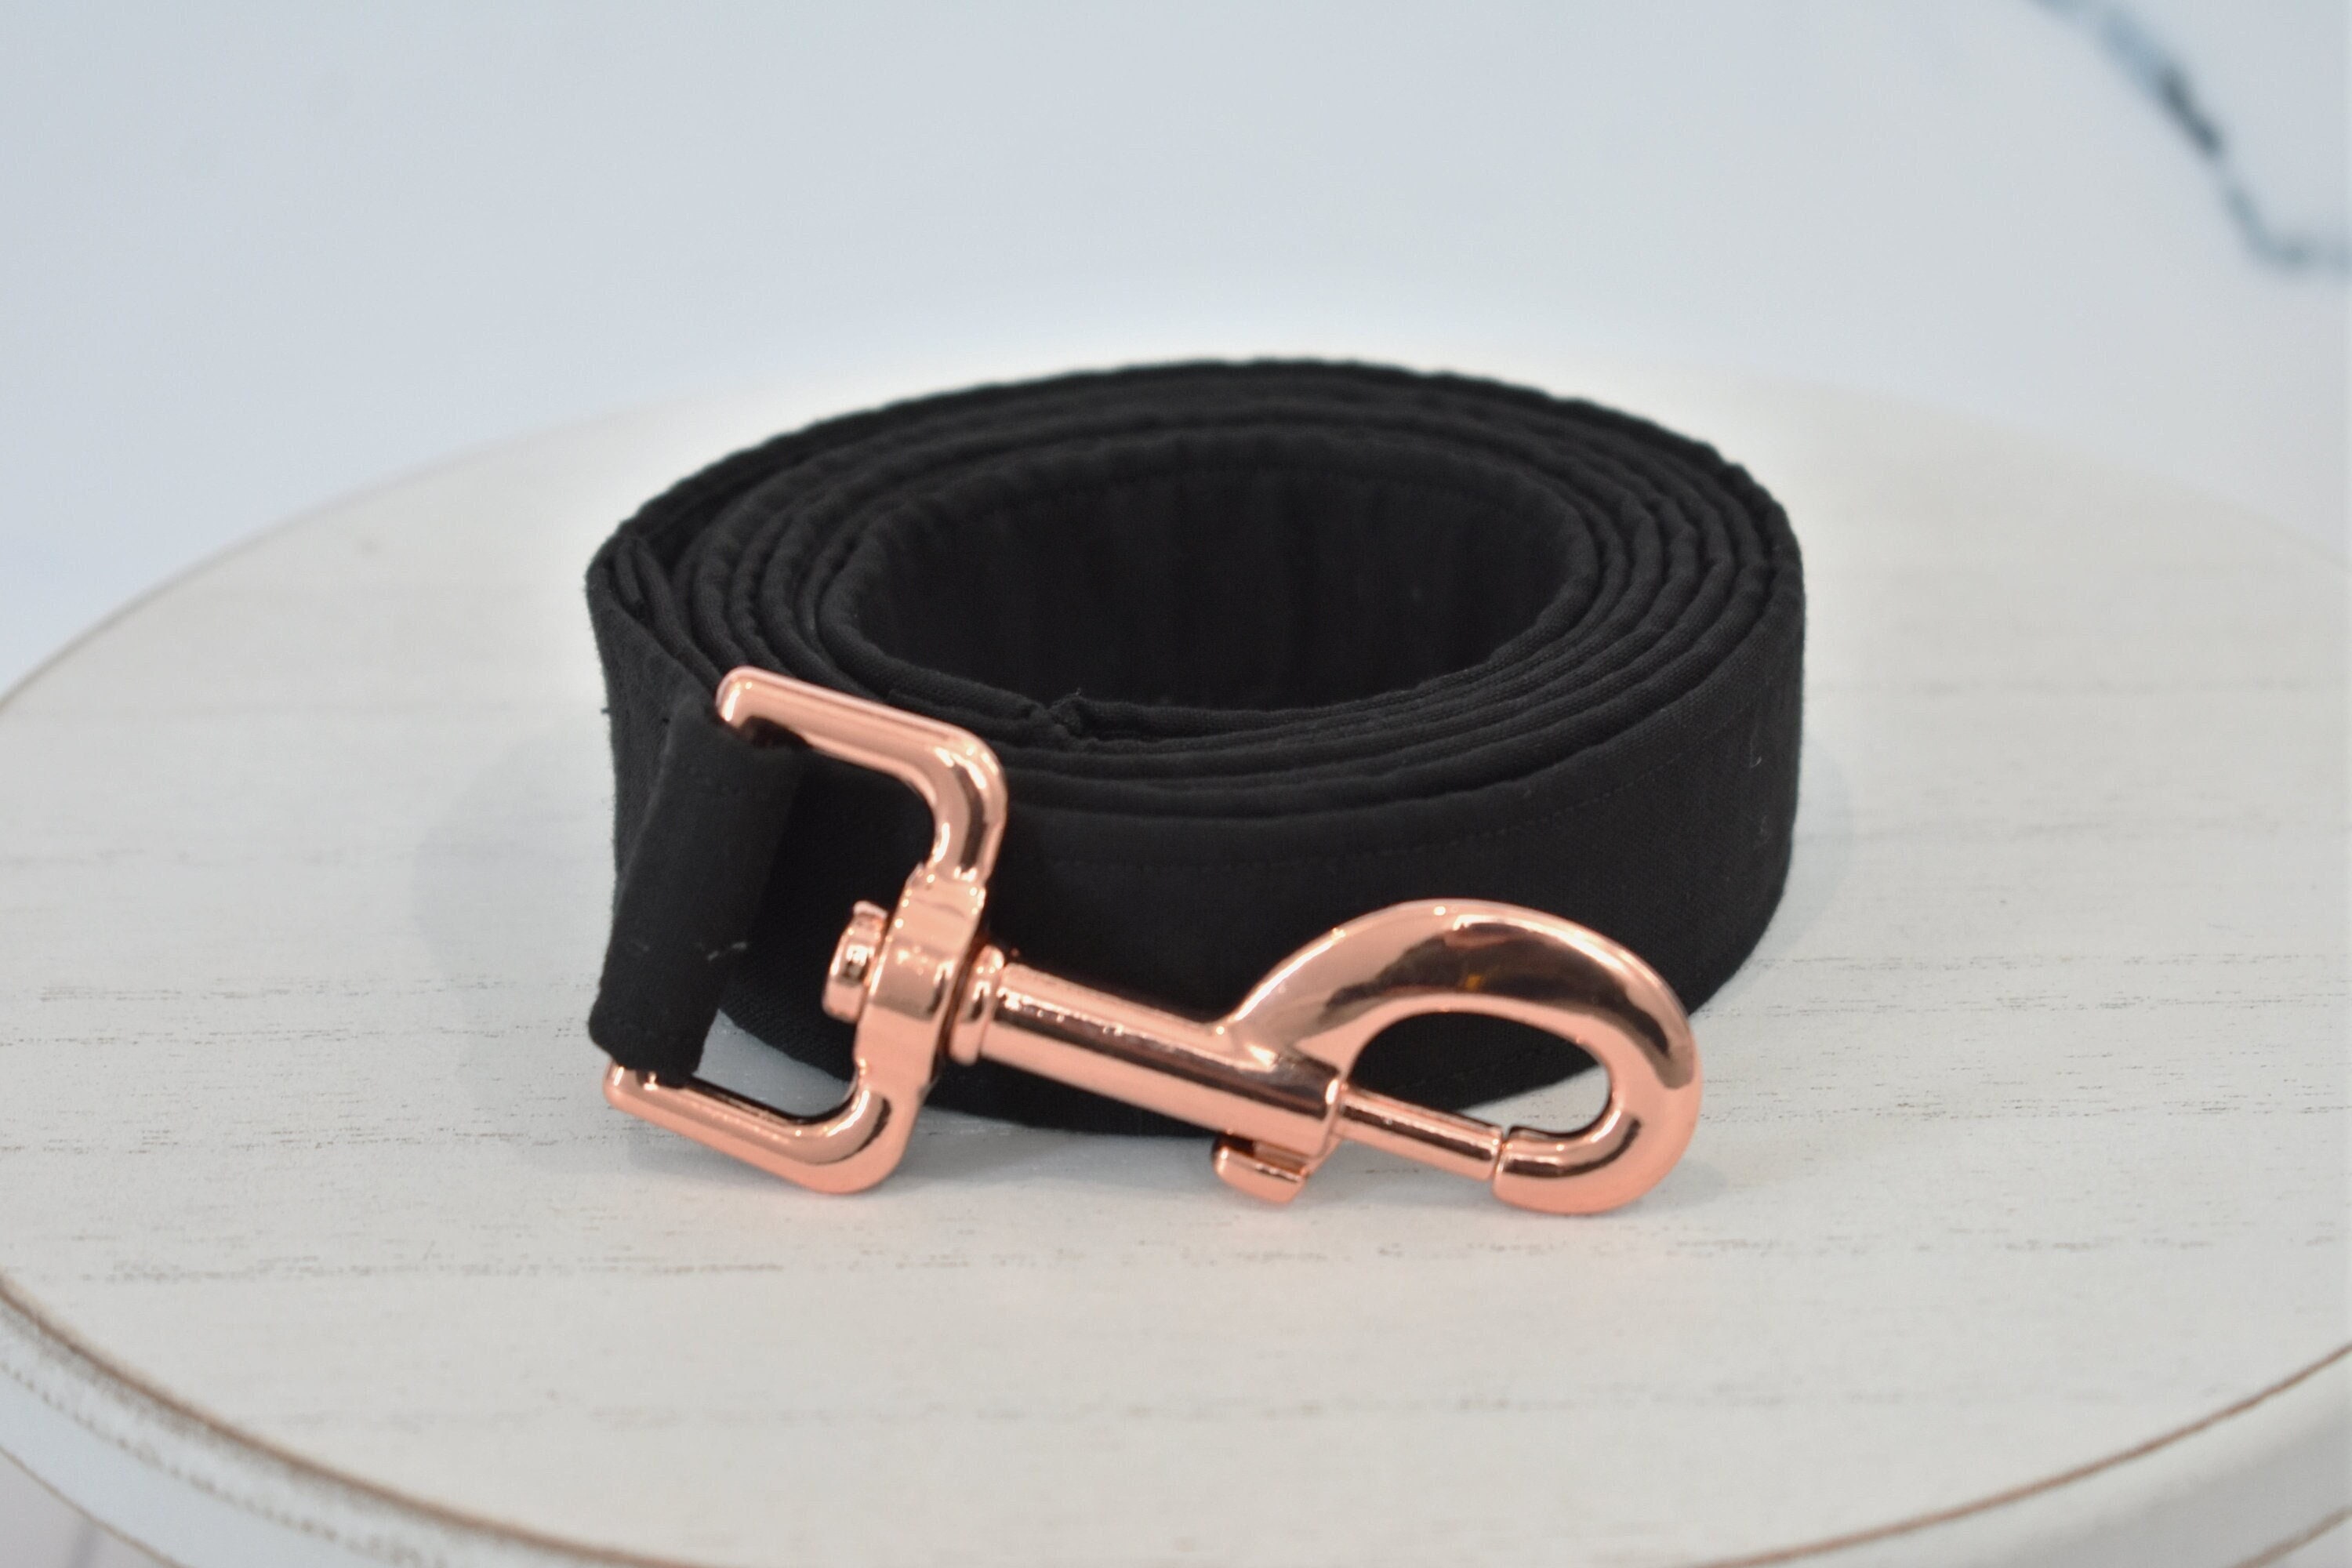 Black dog logo pet leash